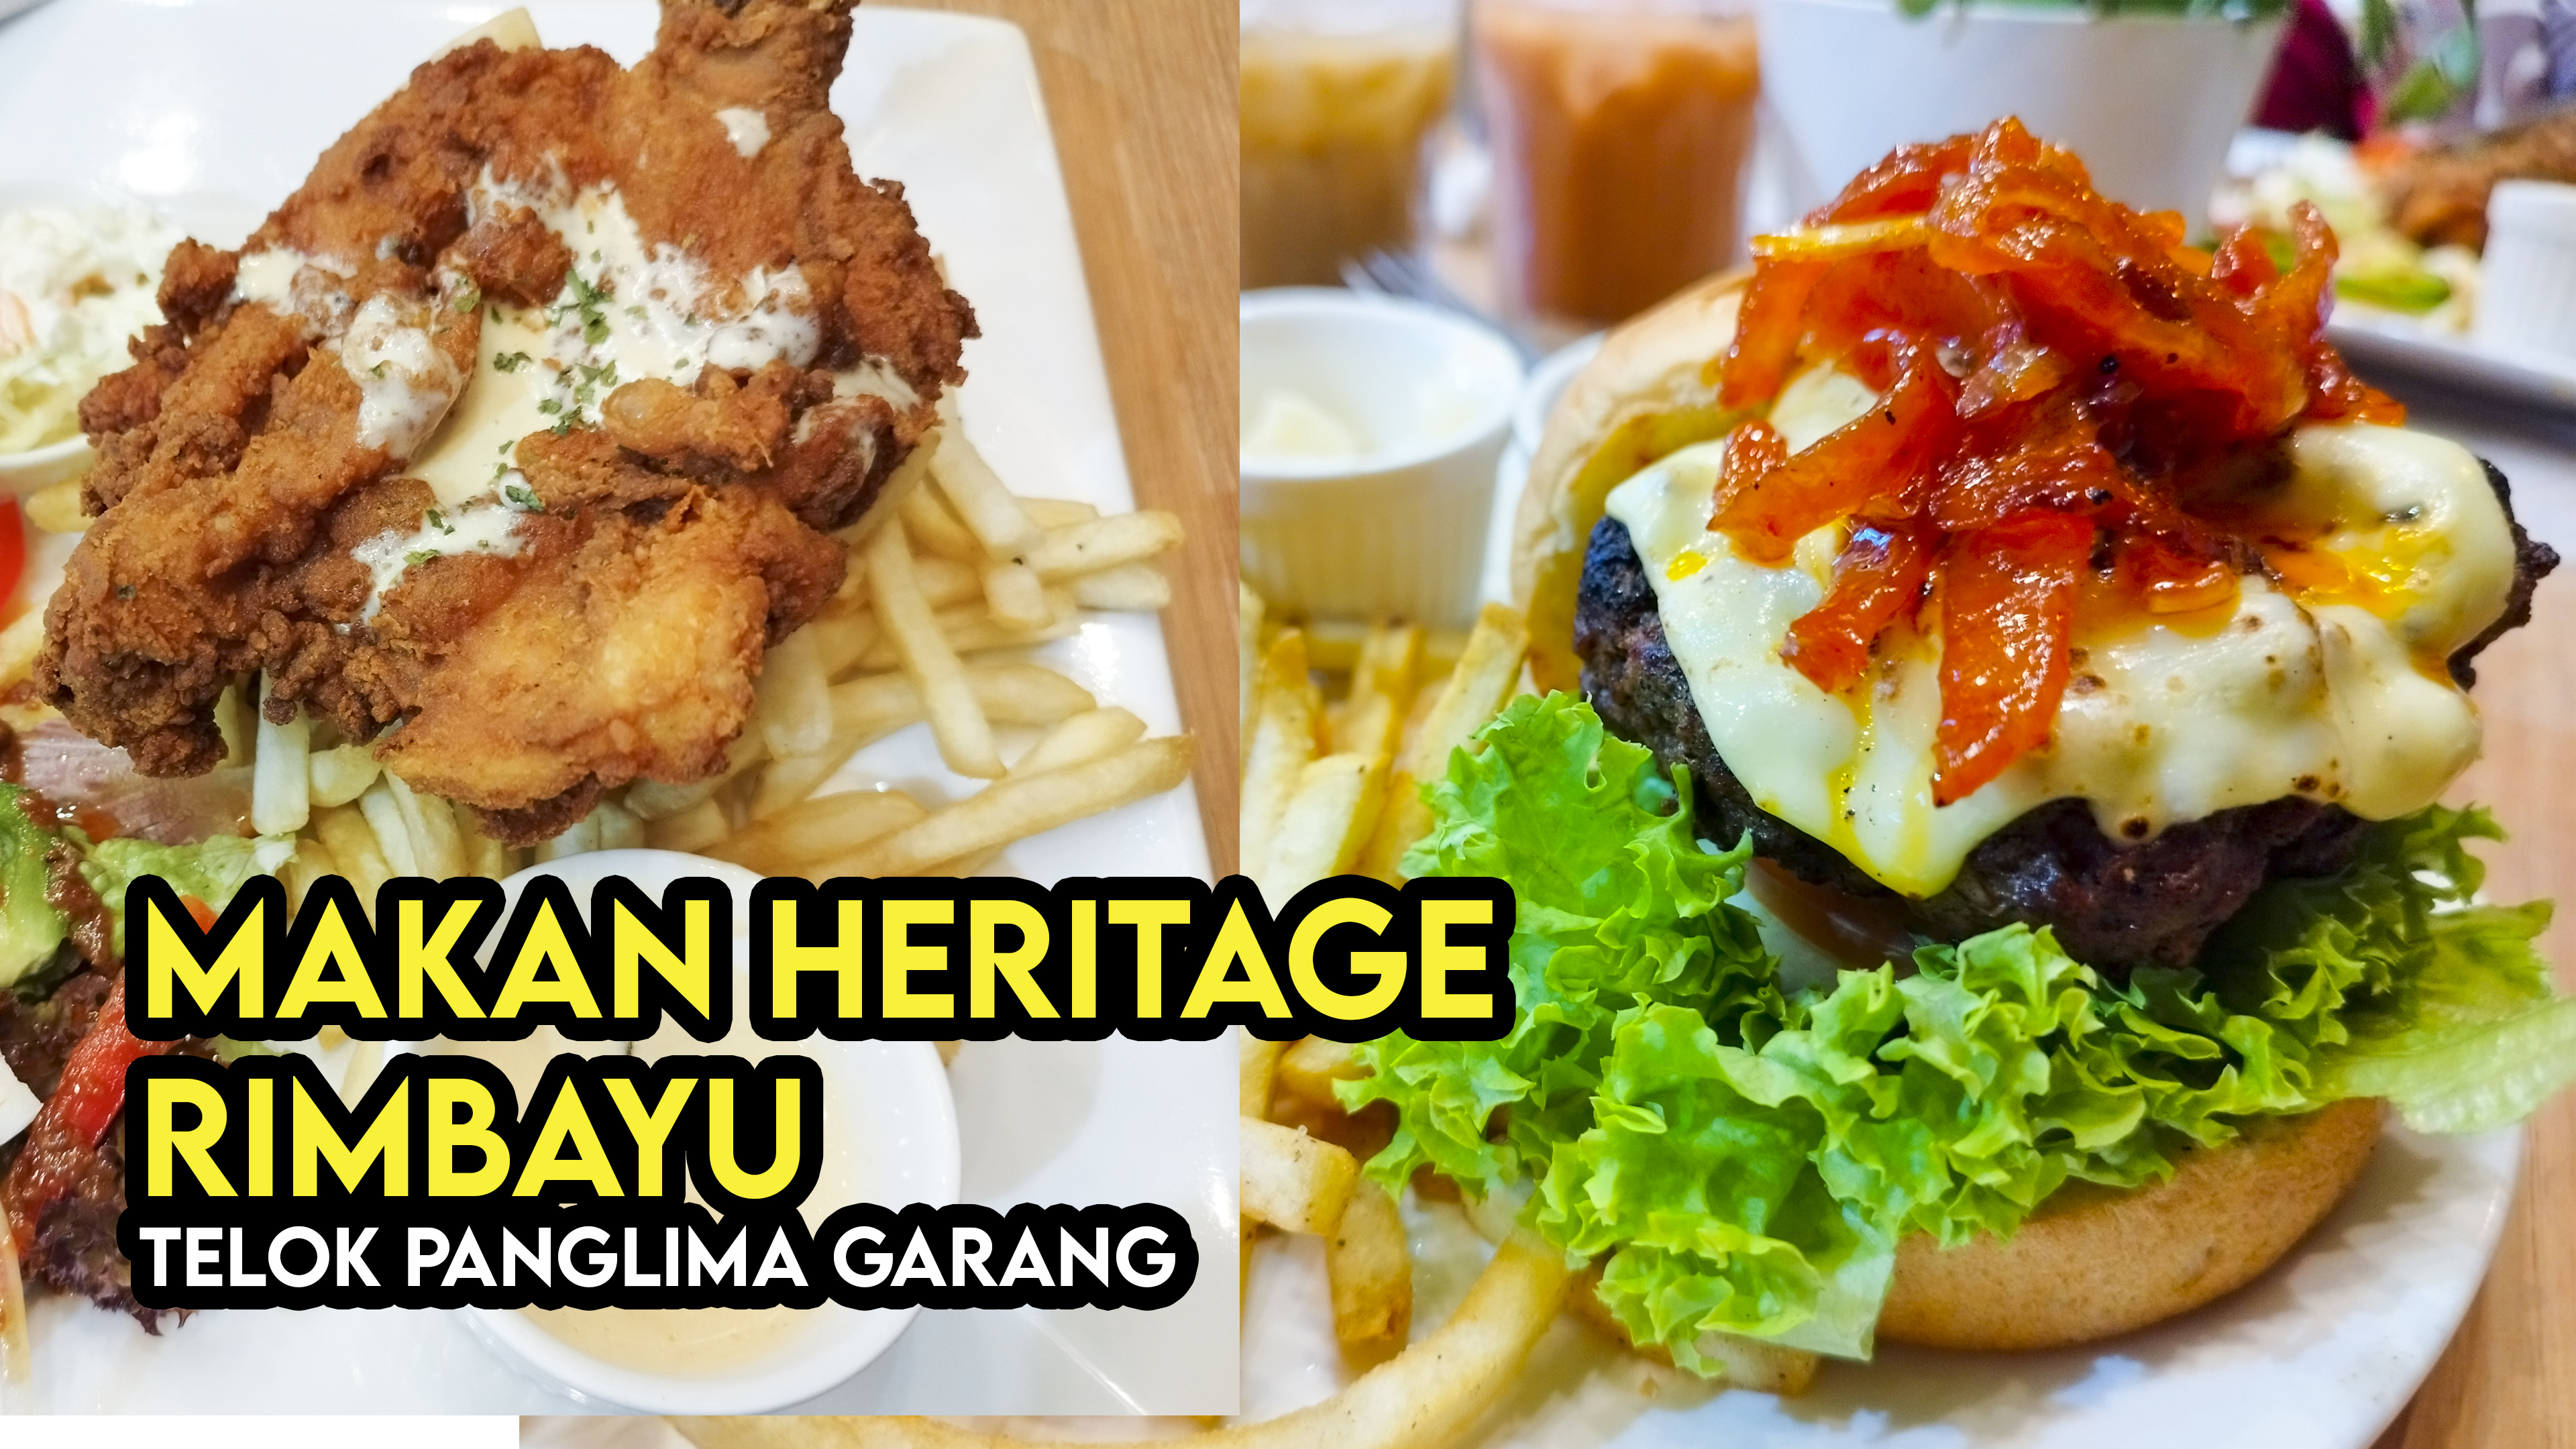 Western Food Makan Heritage Rimbayu Banting